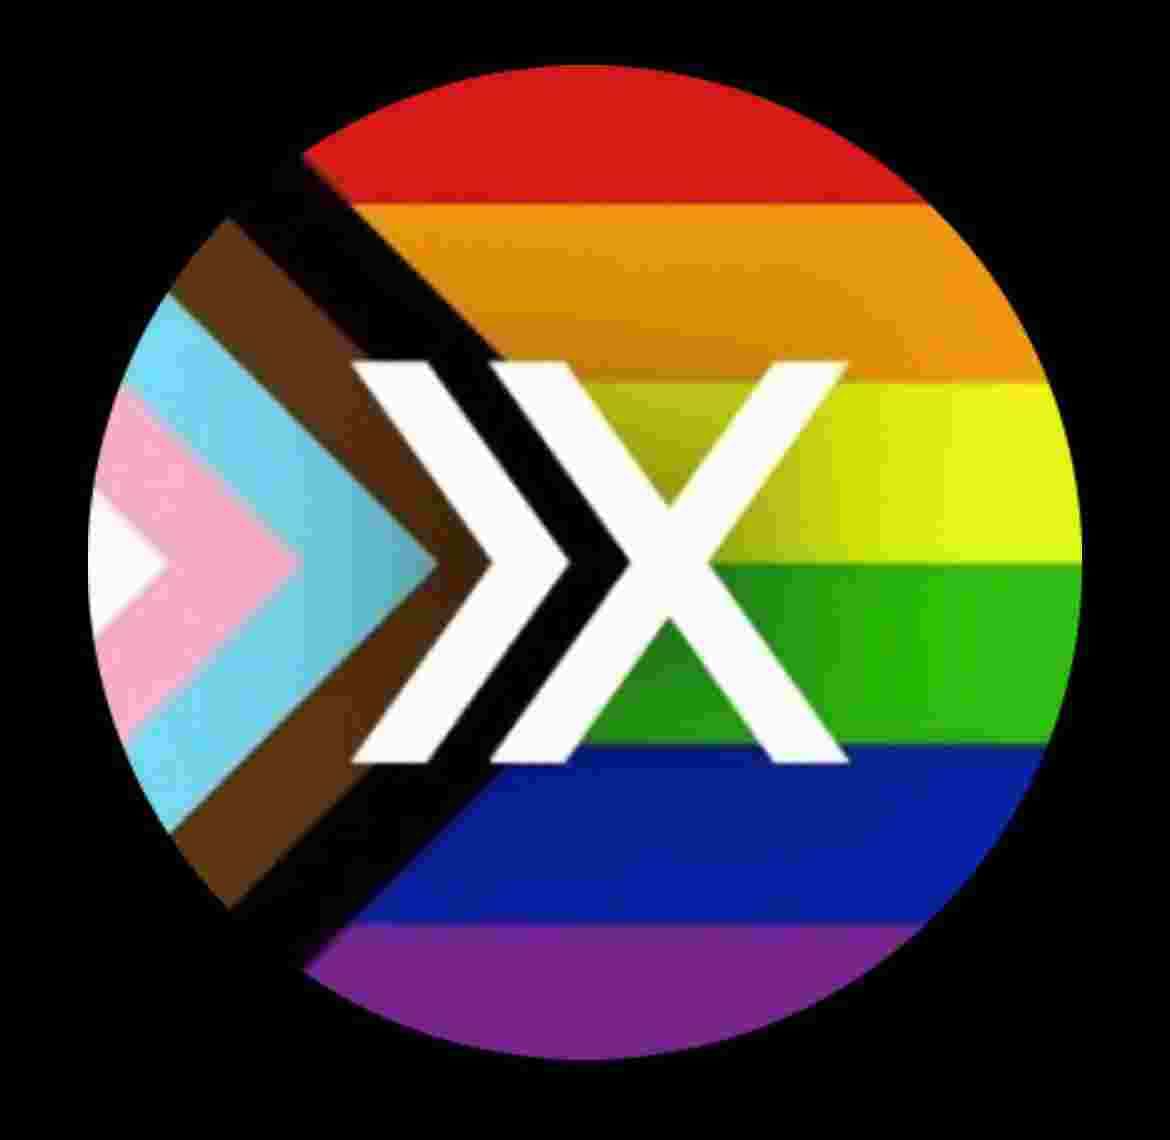 The progress flag as a background a white X logo